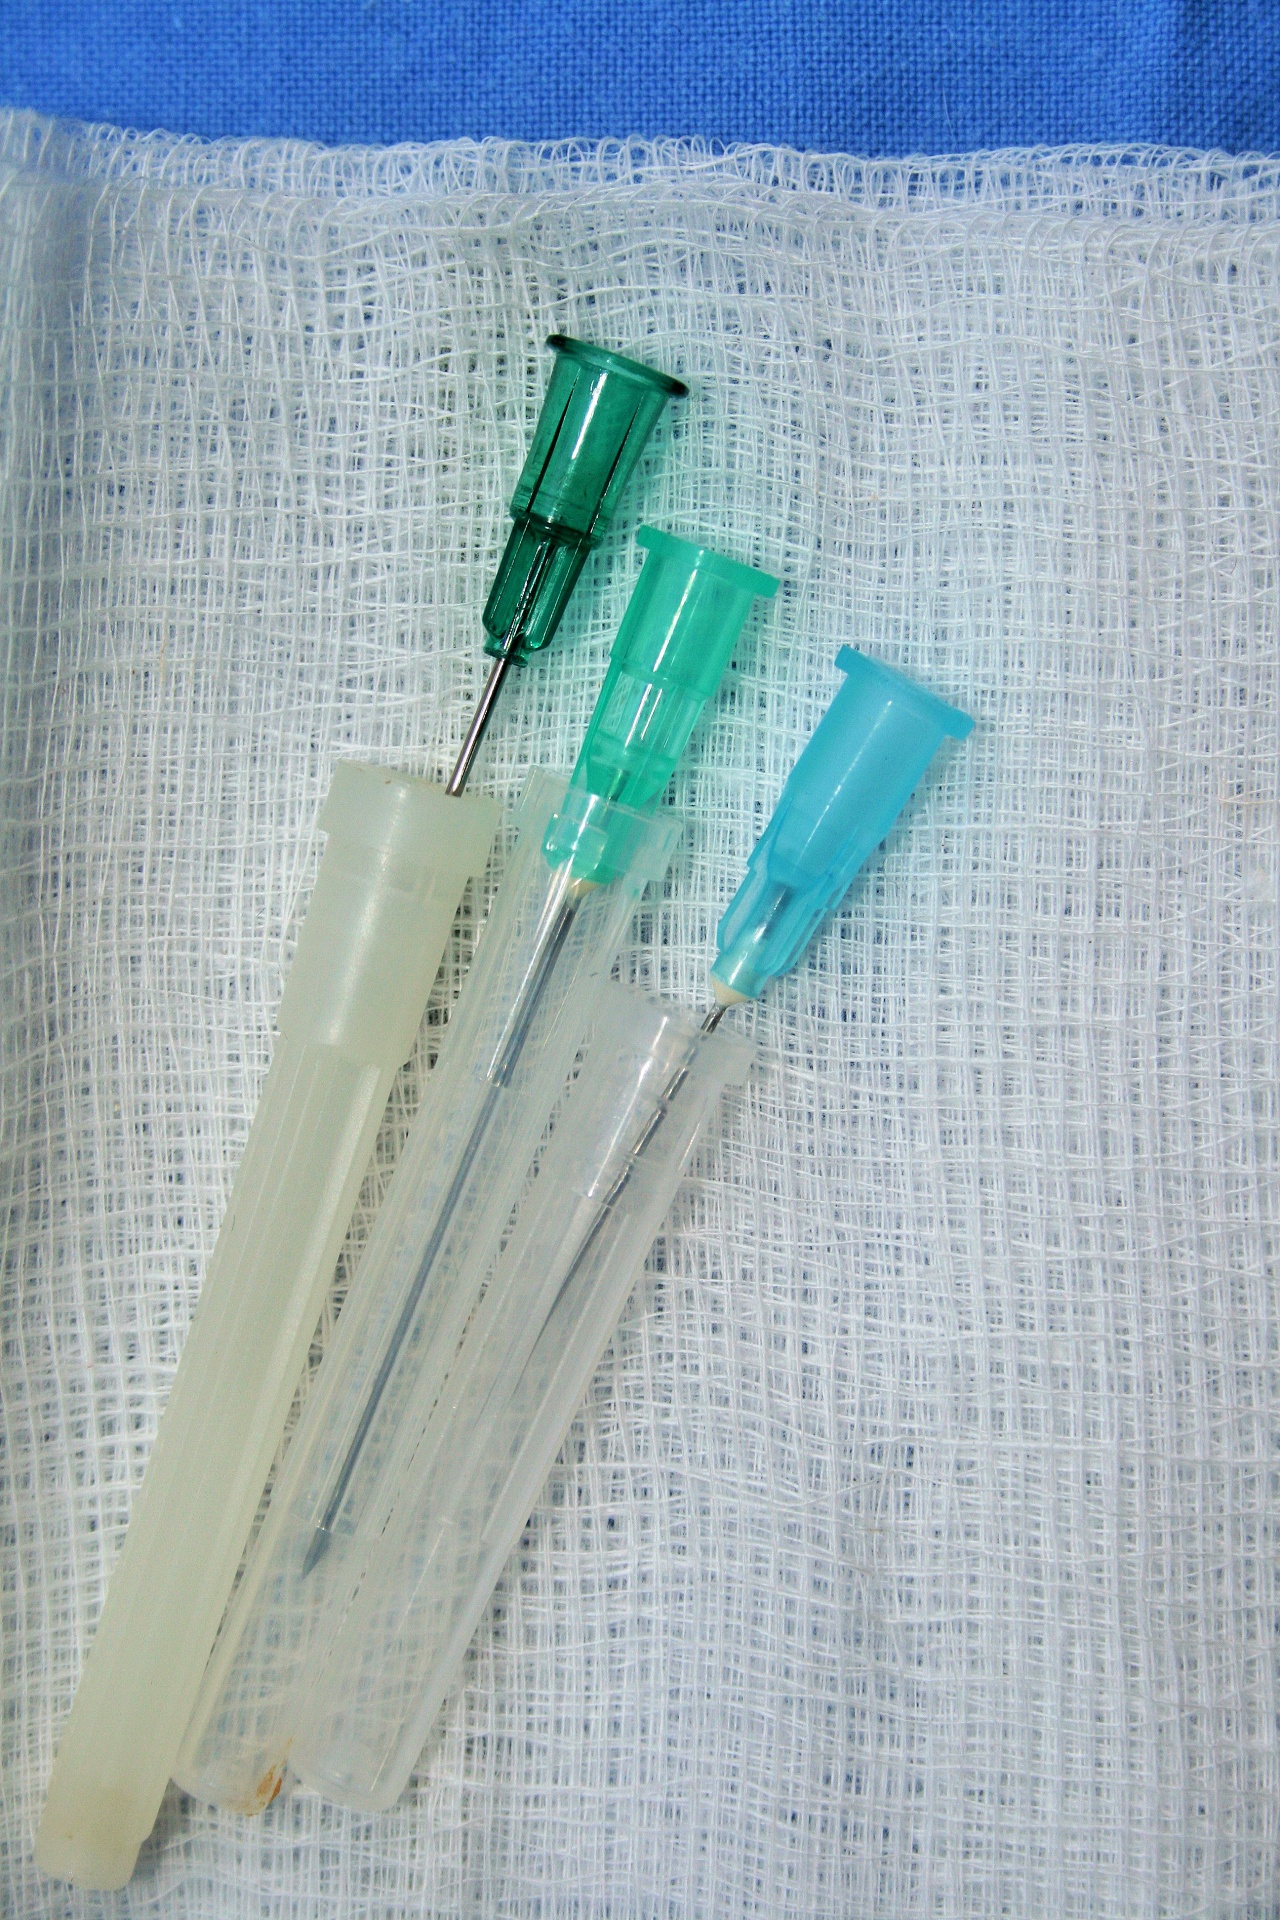 needles hypodermic disposable free photo